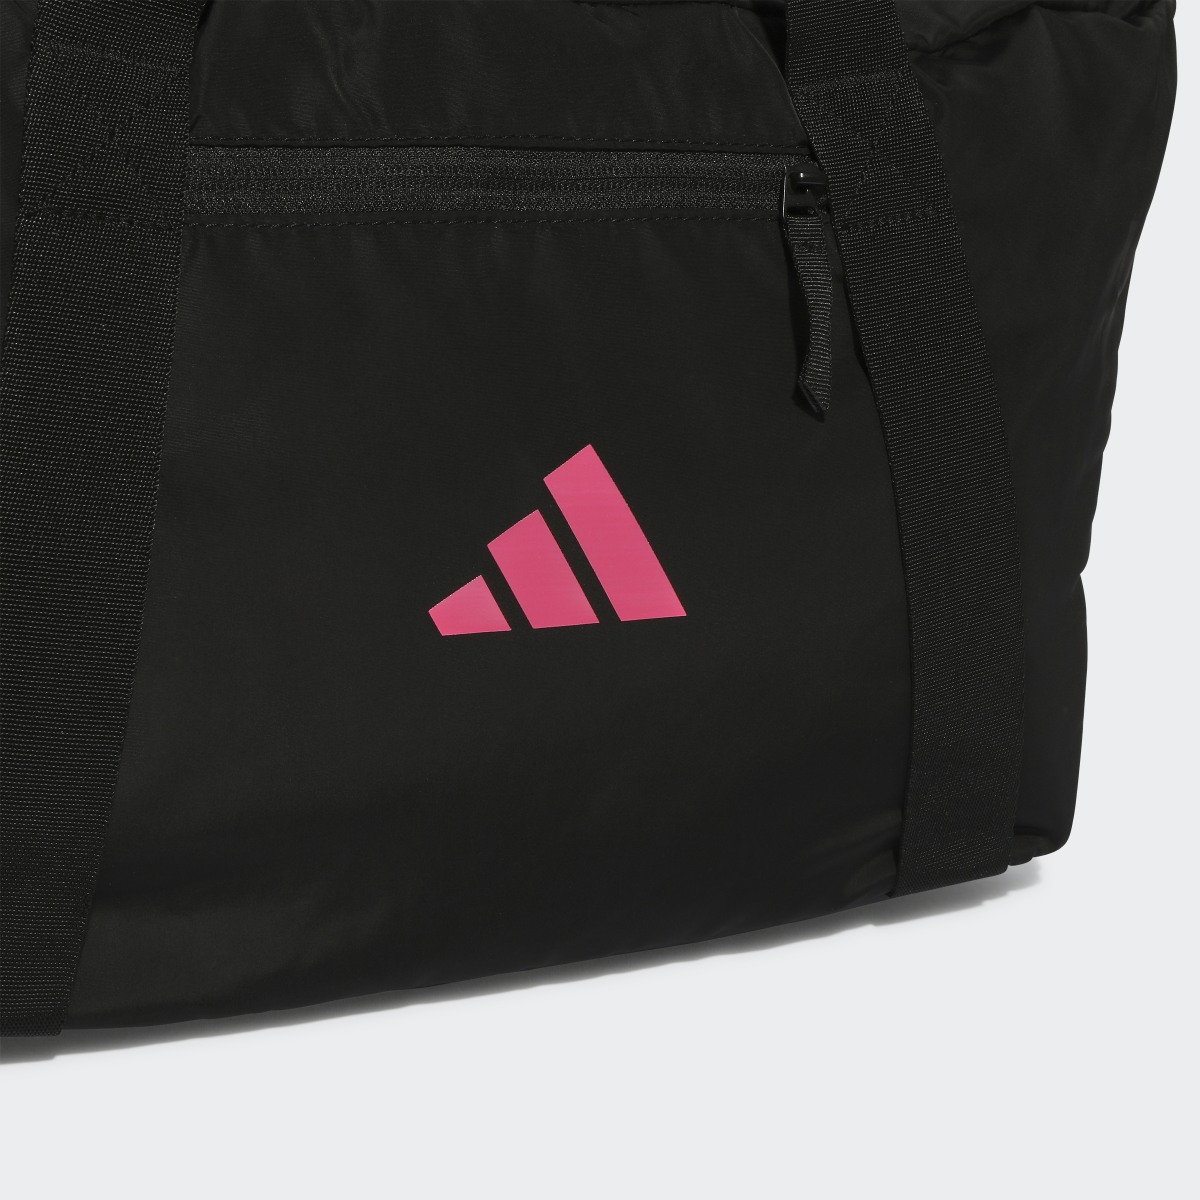 Adidas Sport Bag. 6